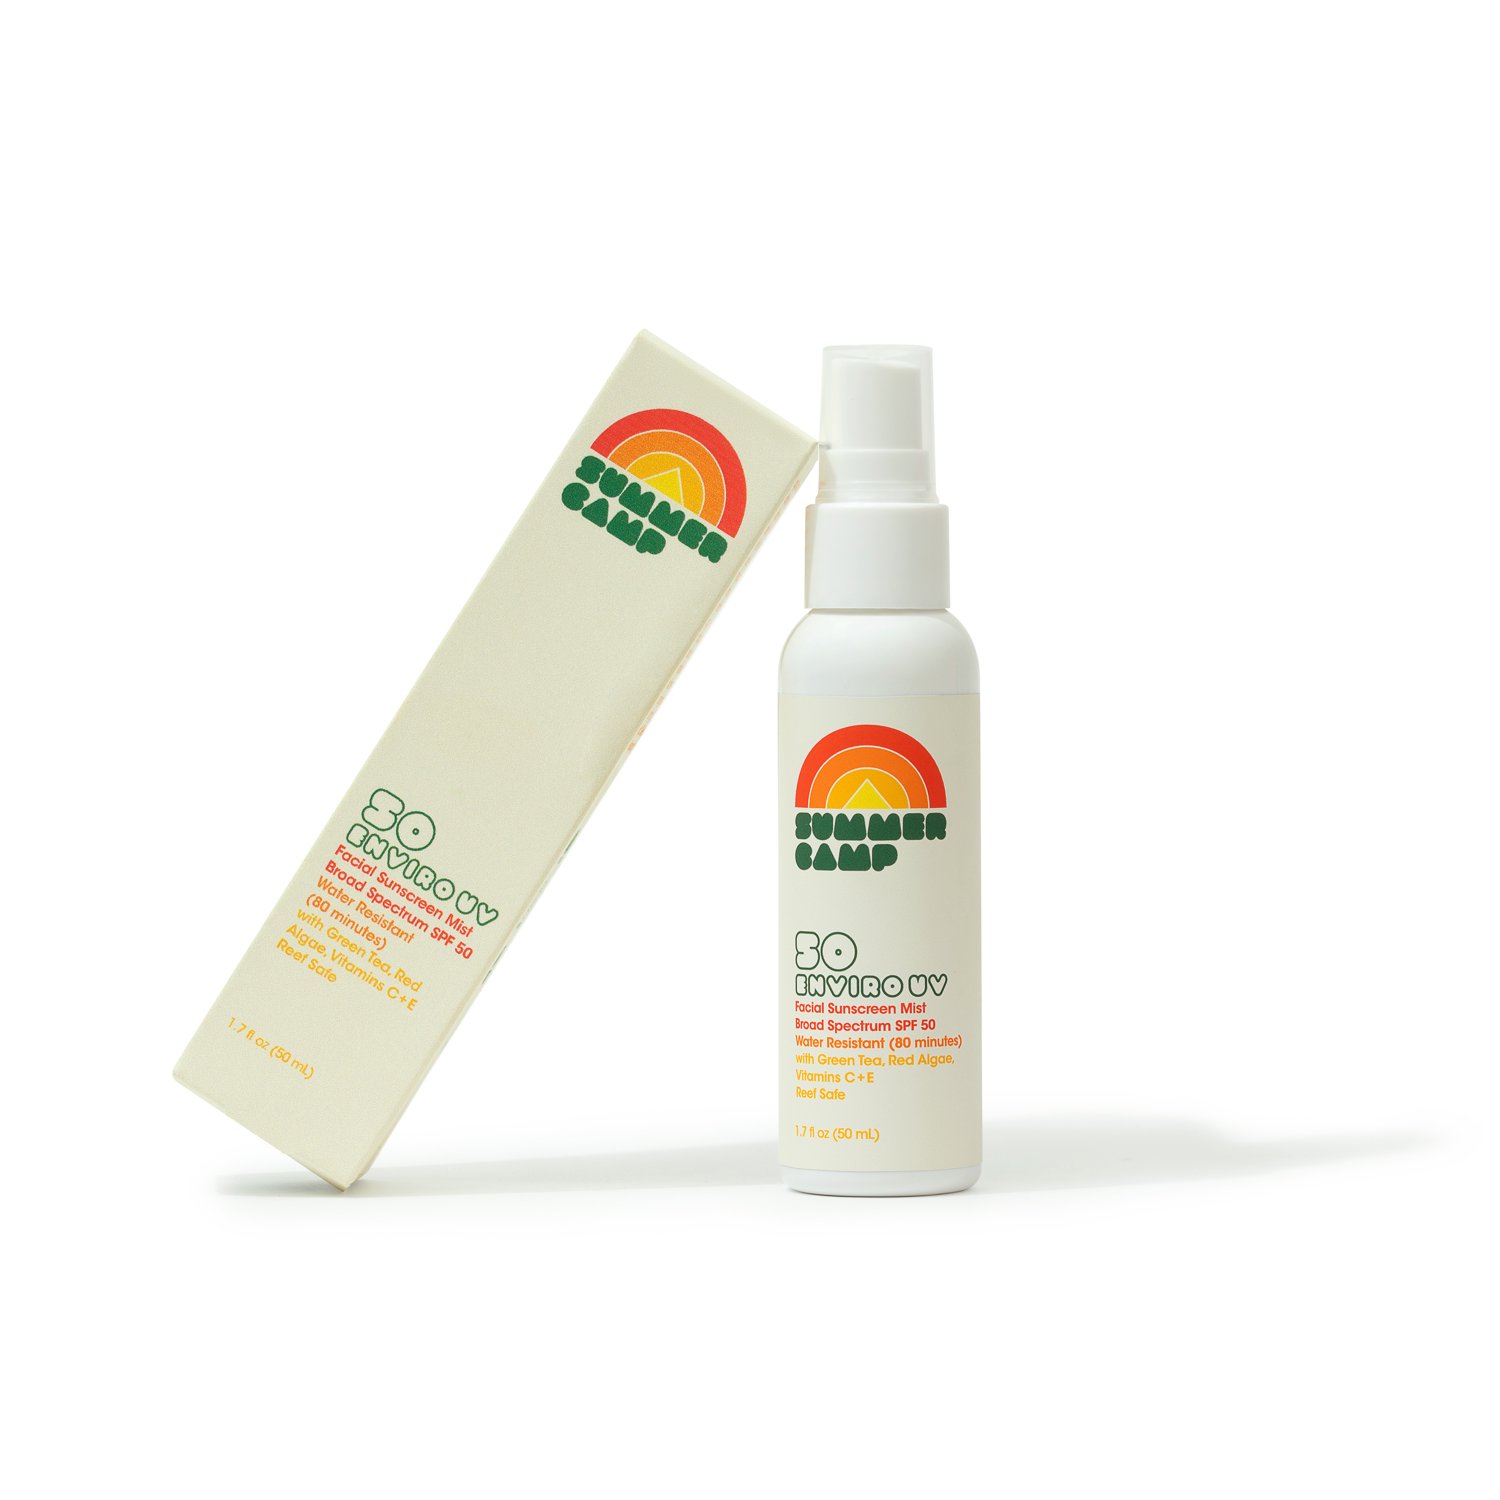 Summer Camp Enviro UV Water Resistant Sunscreen Mist for Face, SPF 50, 1.7 fl oz - image 2 of 5